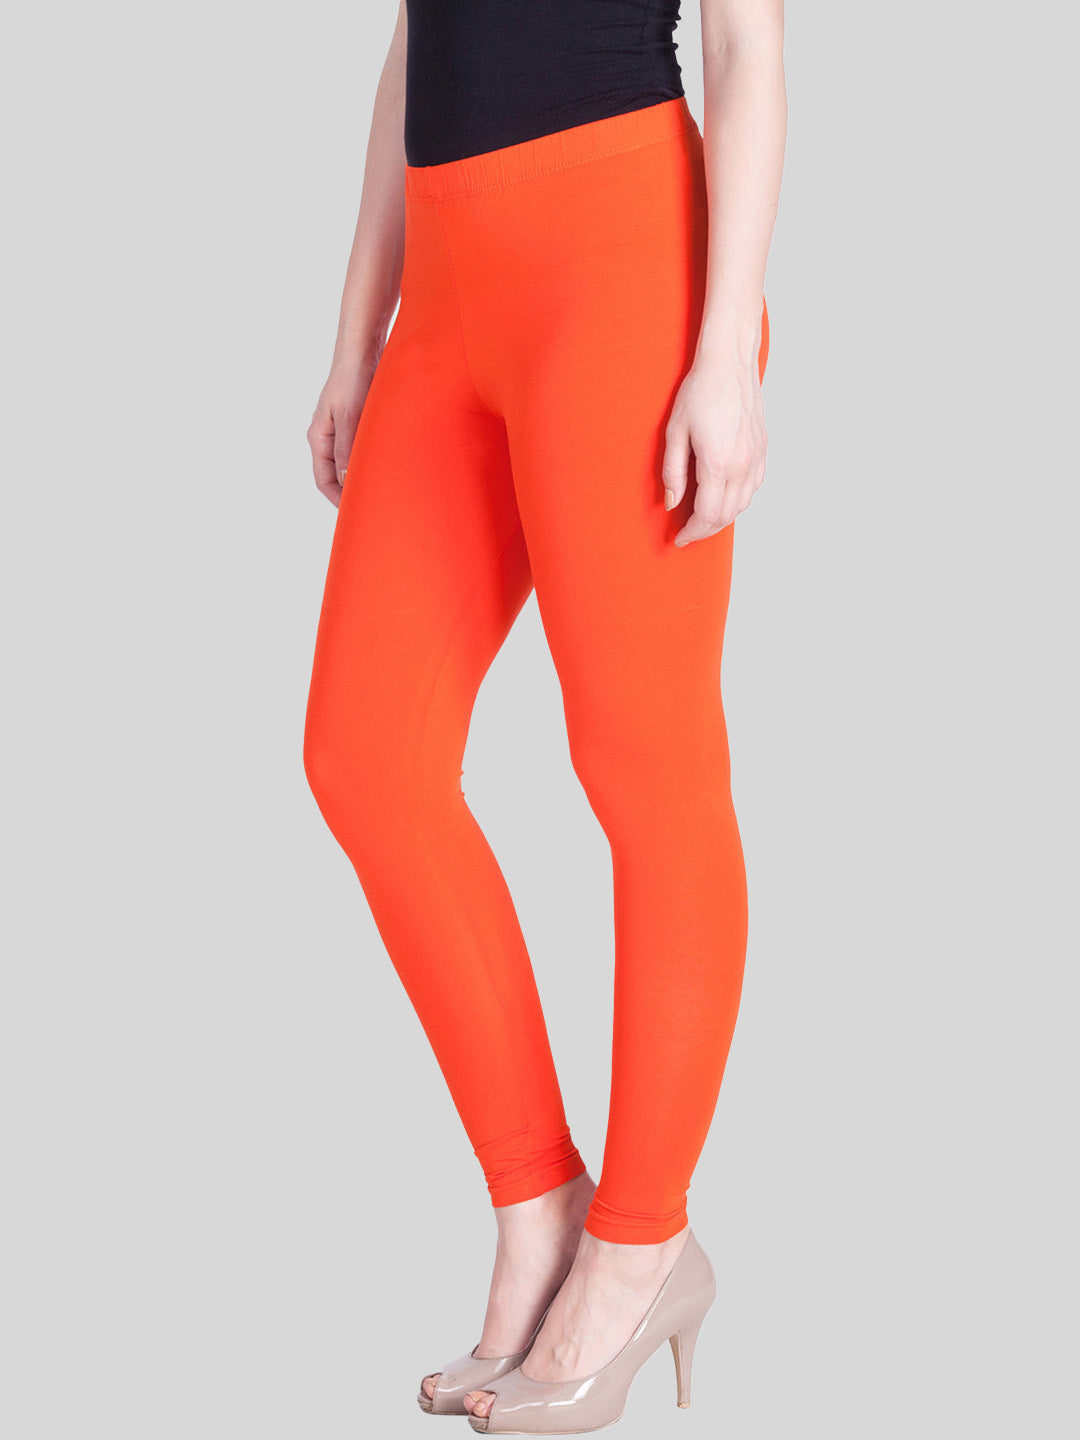 Buy Suti Women Cotton Ankle Length Leggings Dark Orange online